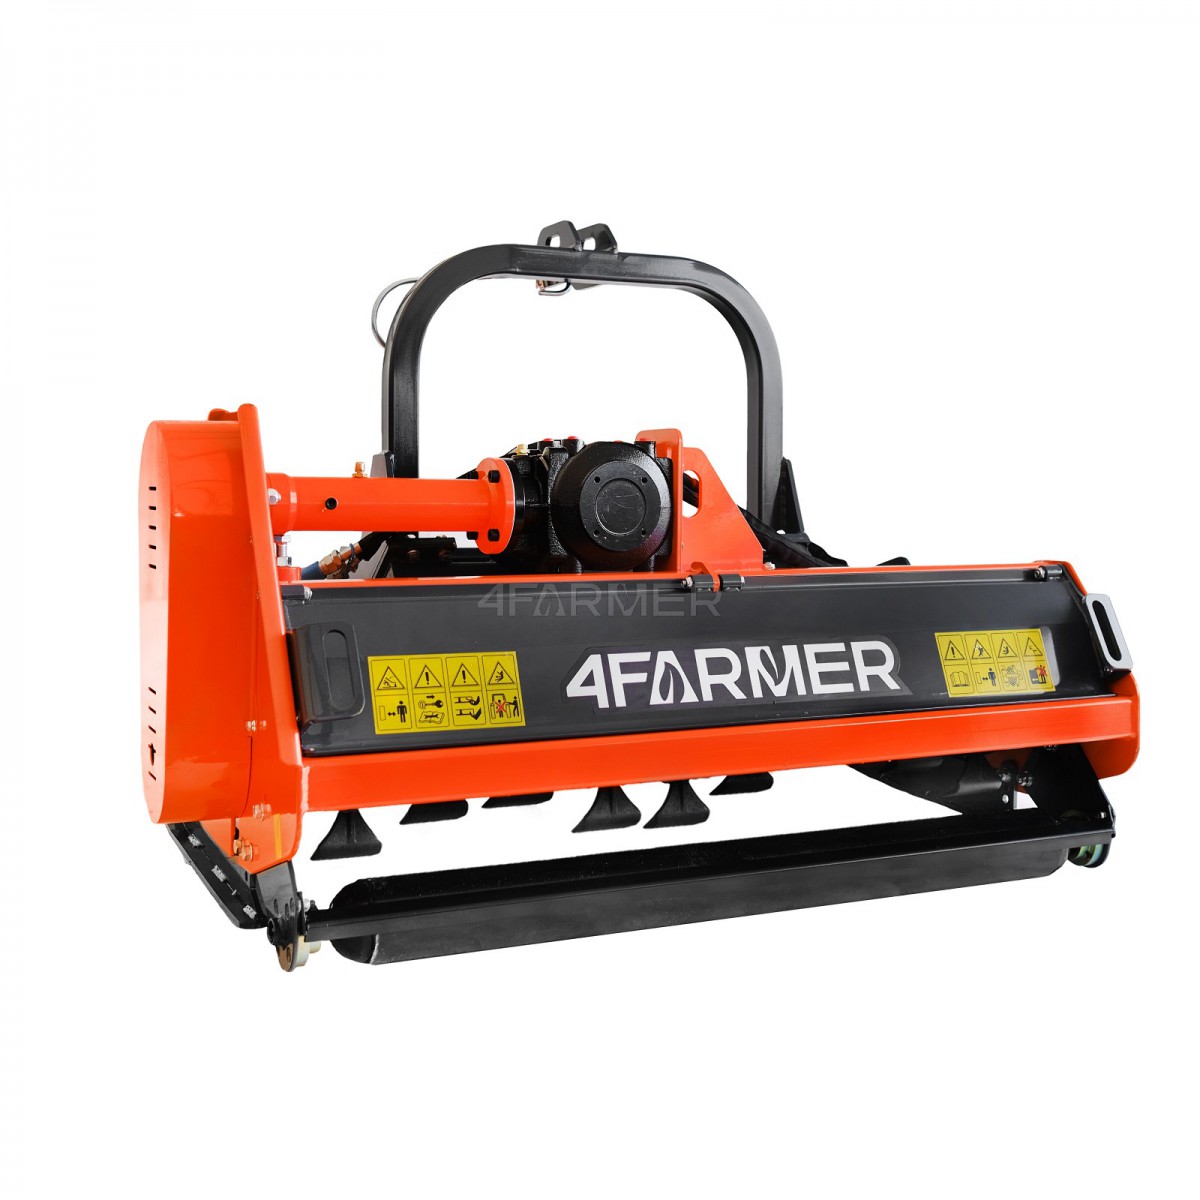 EFGCH 125D 4FARMER flail mower - orange